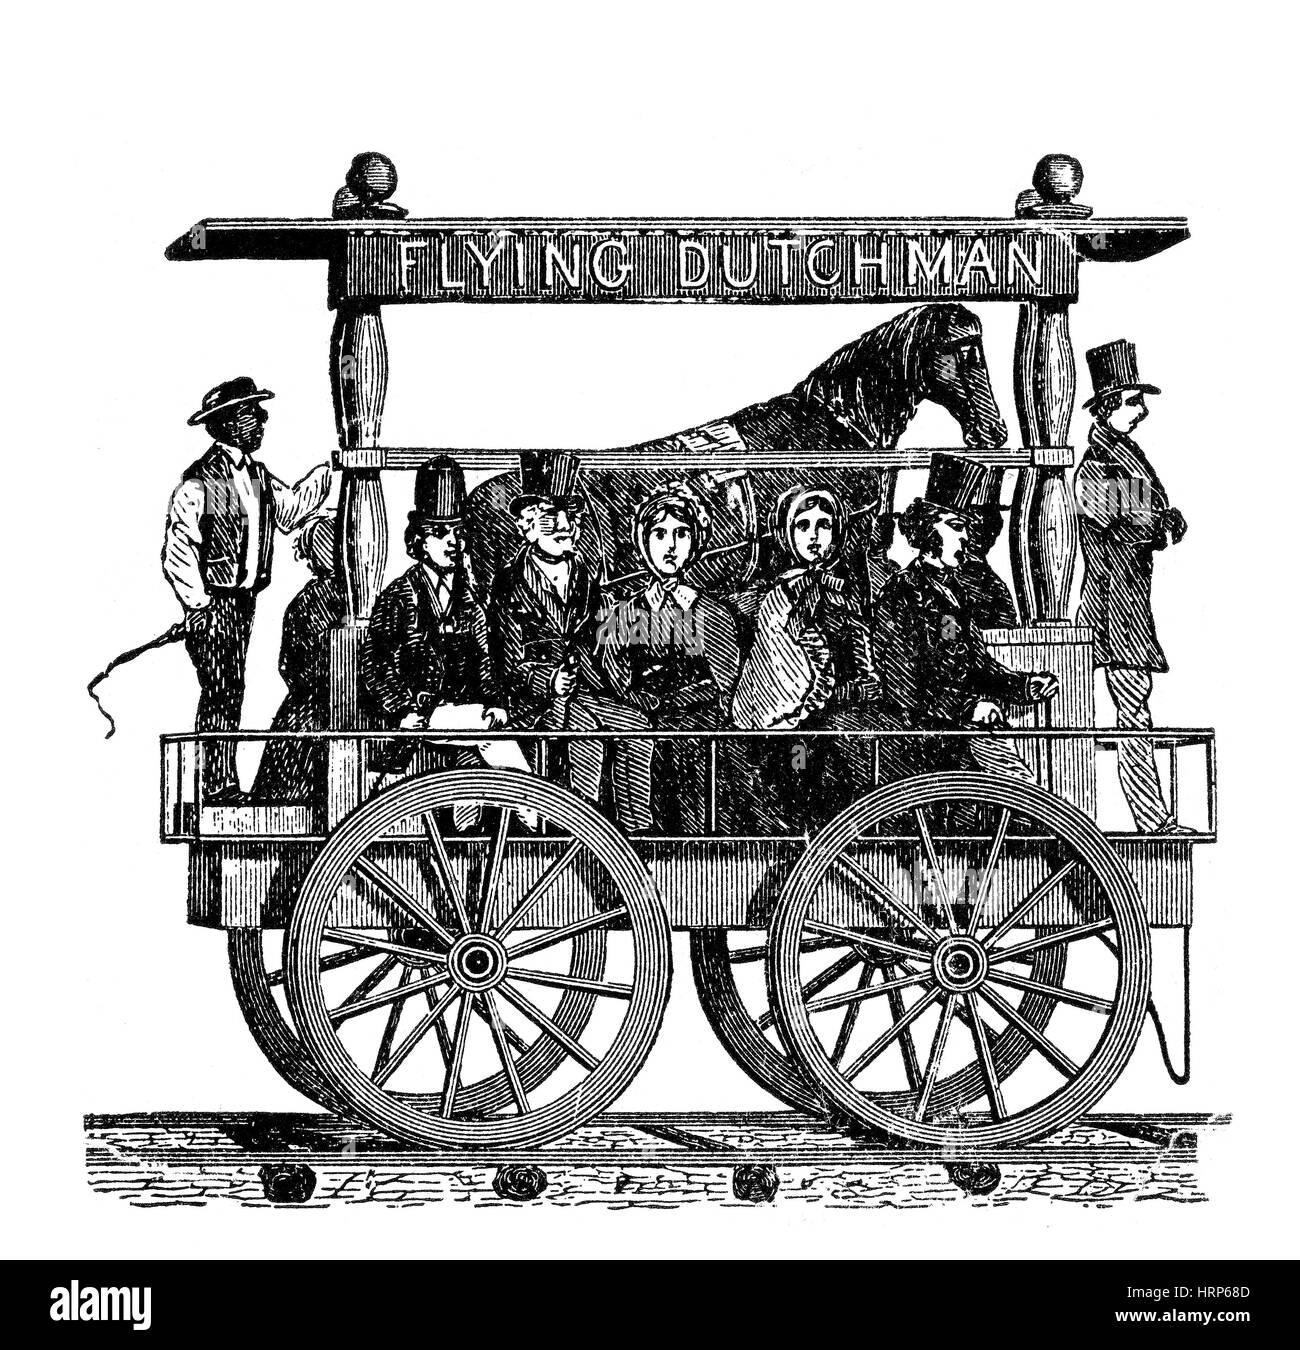 Flying Dutchman Passenger Train, 19th Century Stock Photo